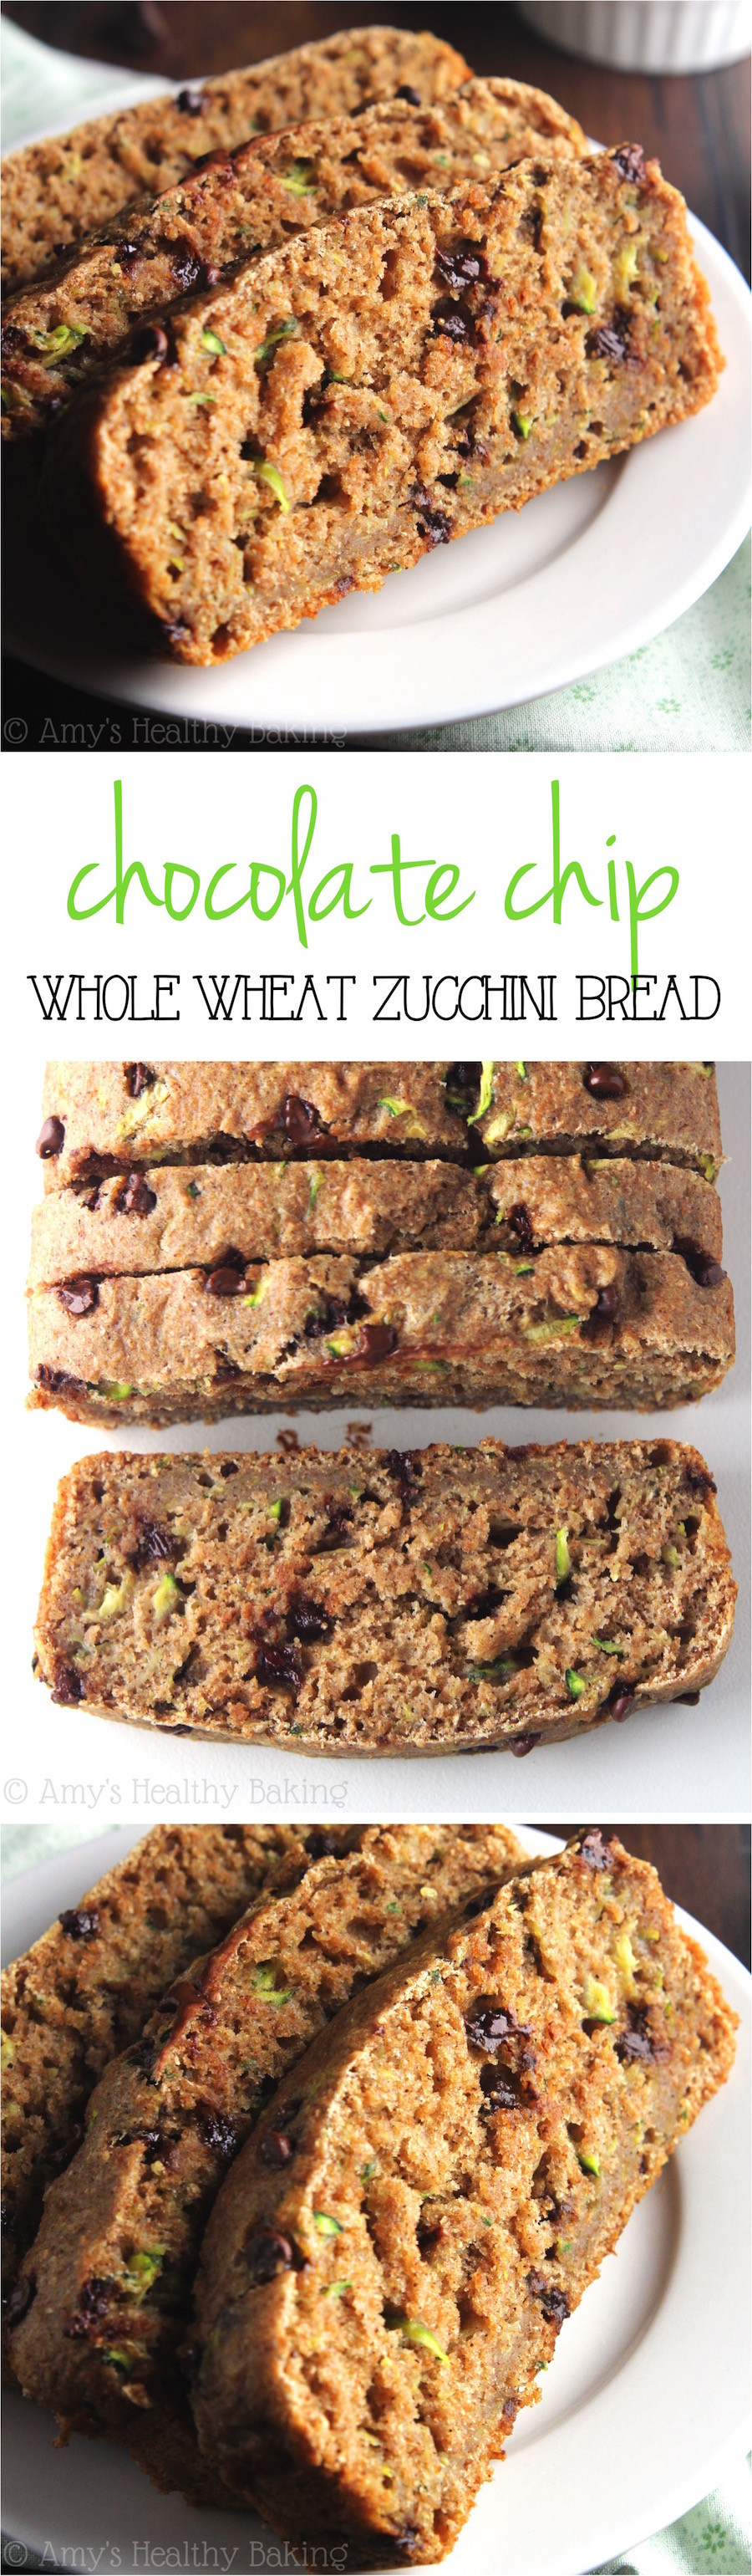 Whole Wheat Bread Healthy 20 Ideas for whole Wheat Chocolate Chip Zucchini Bread